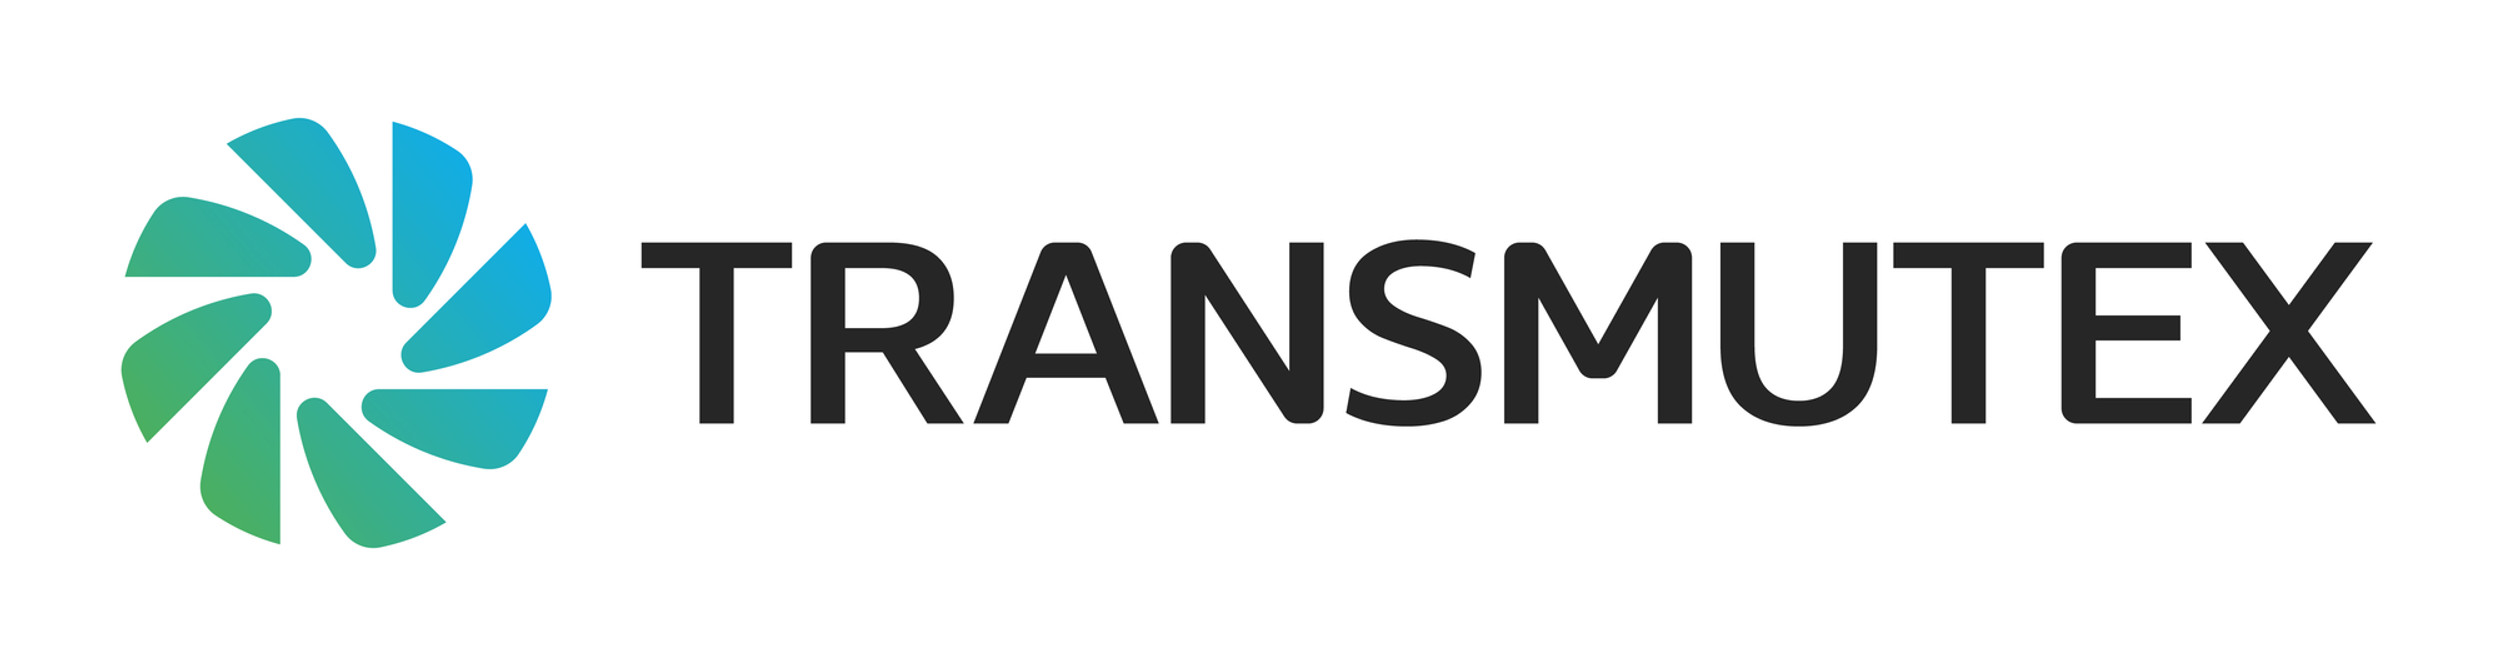 Transmutex logotips